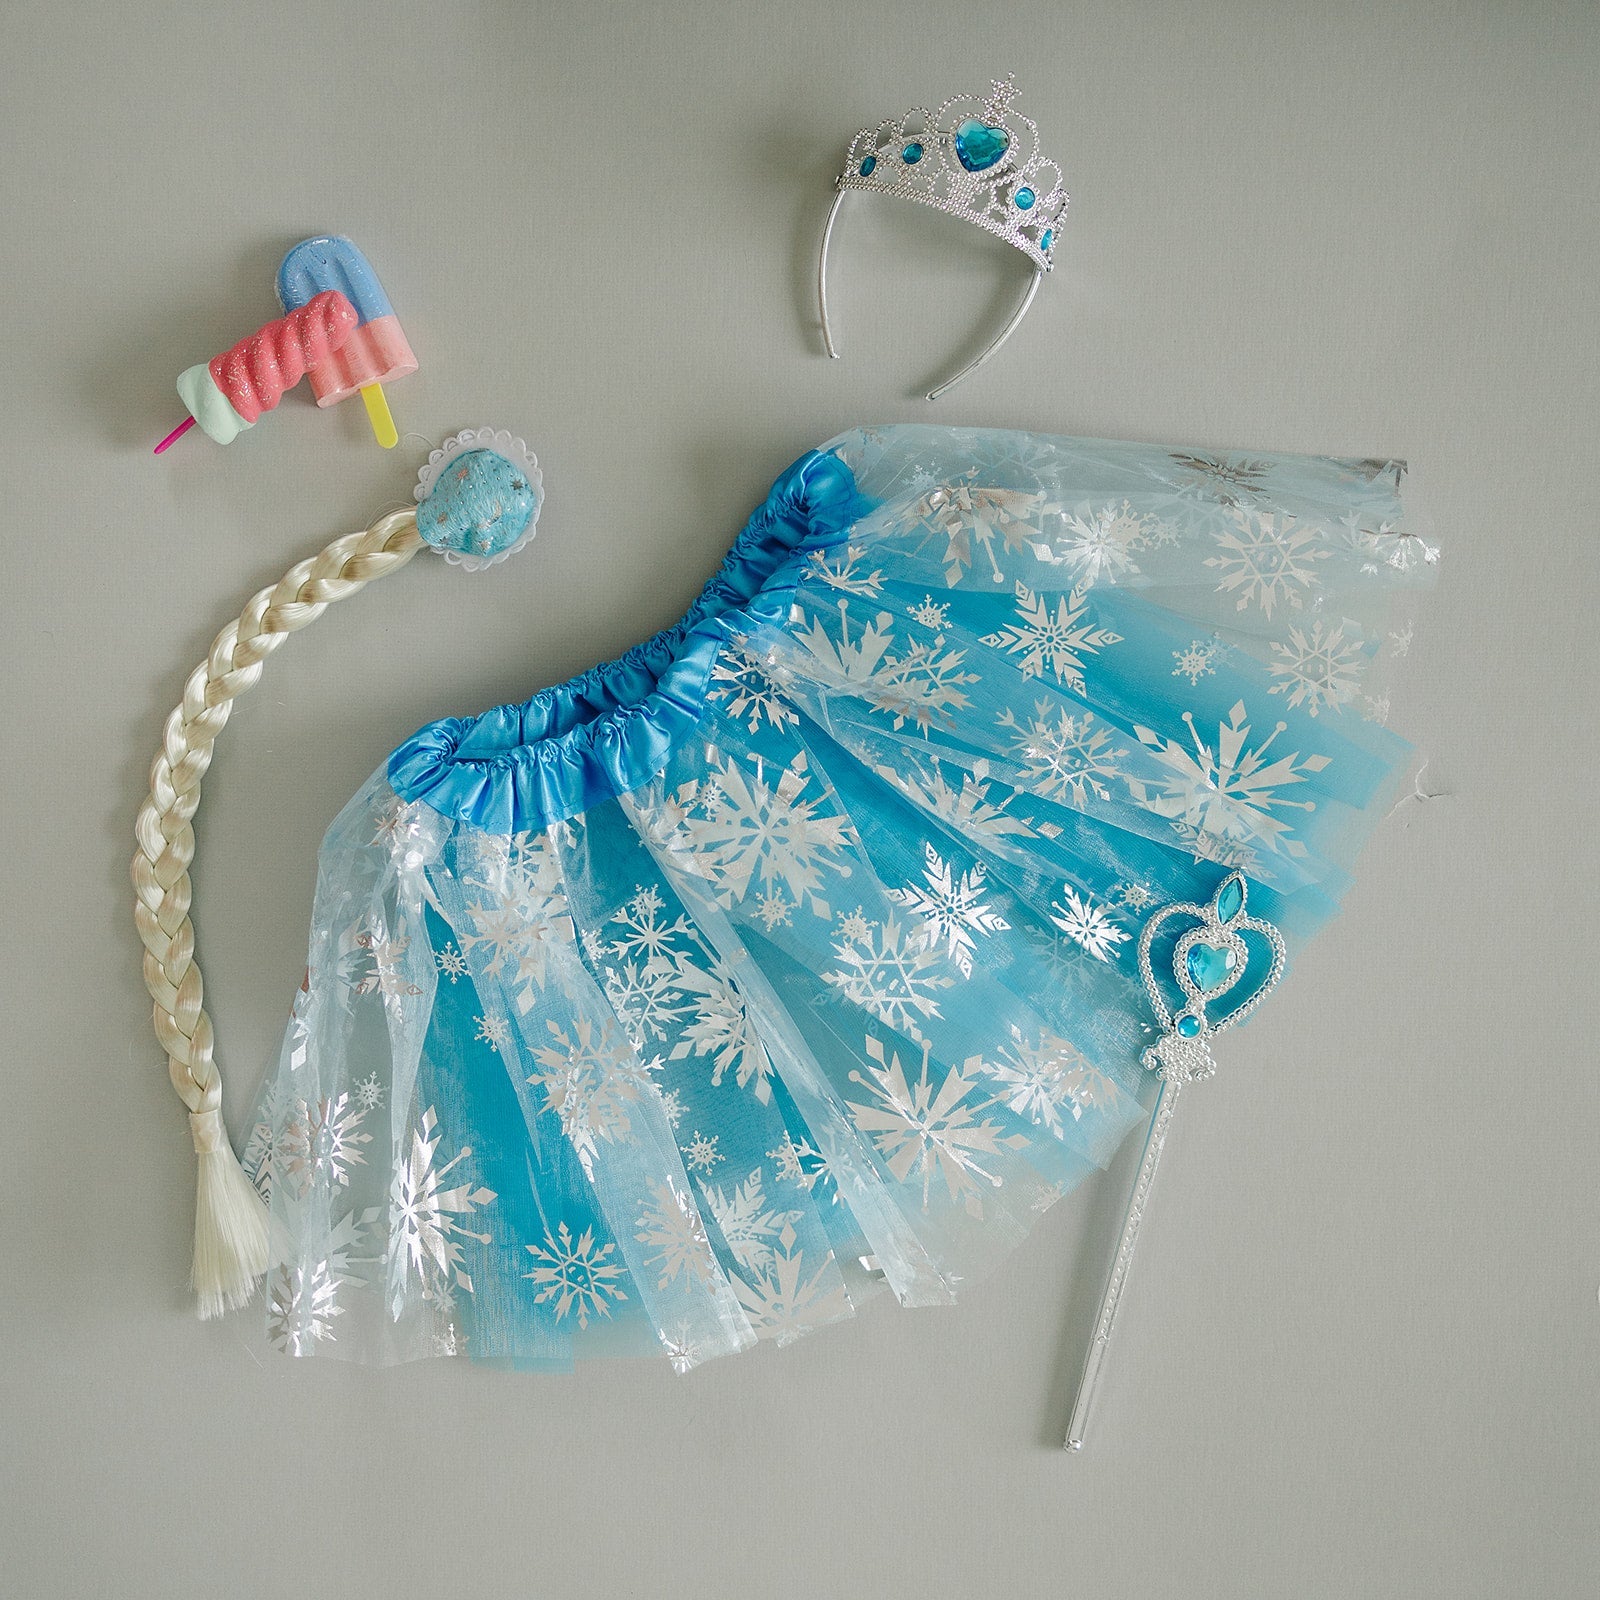 Snowflake Princess Tutu Set (Age 3-6) Dress Up Not specified 